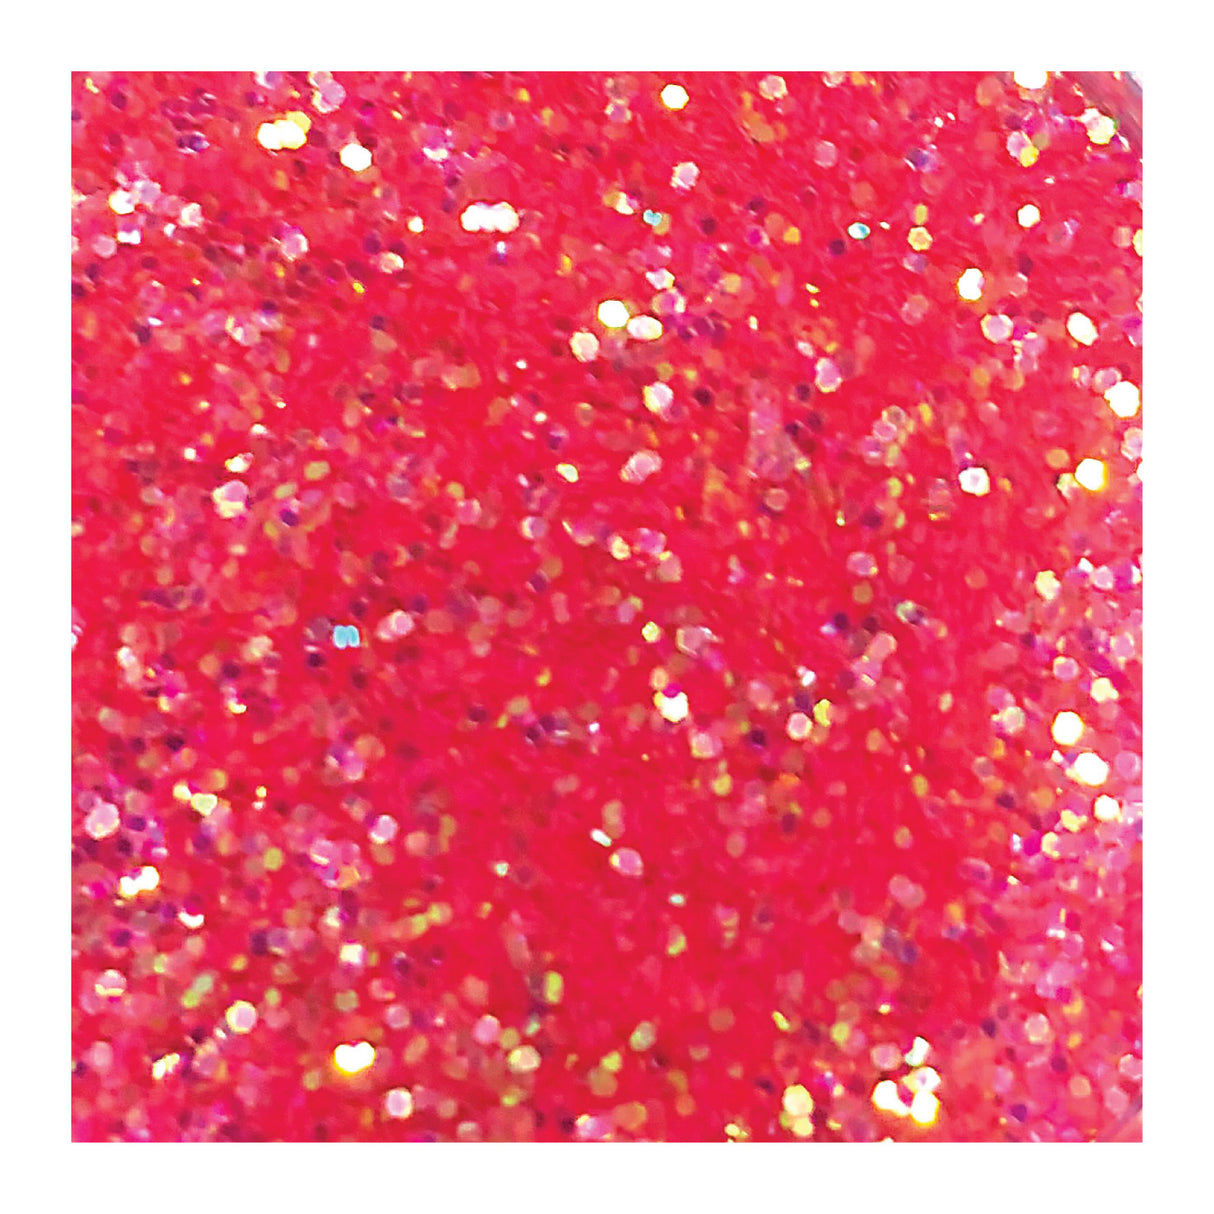 Coral Reef Sparkelicious Glitter 1/2oz Jar